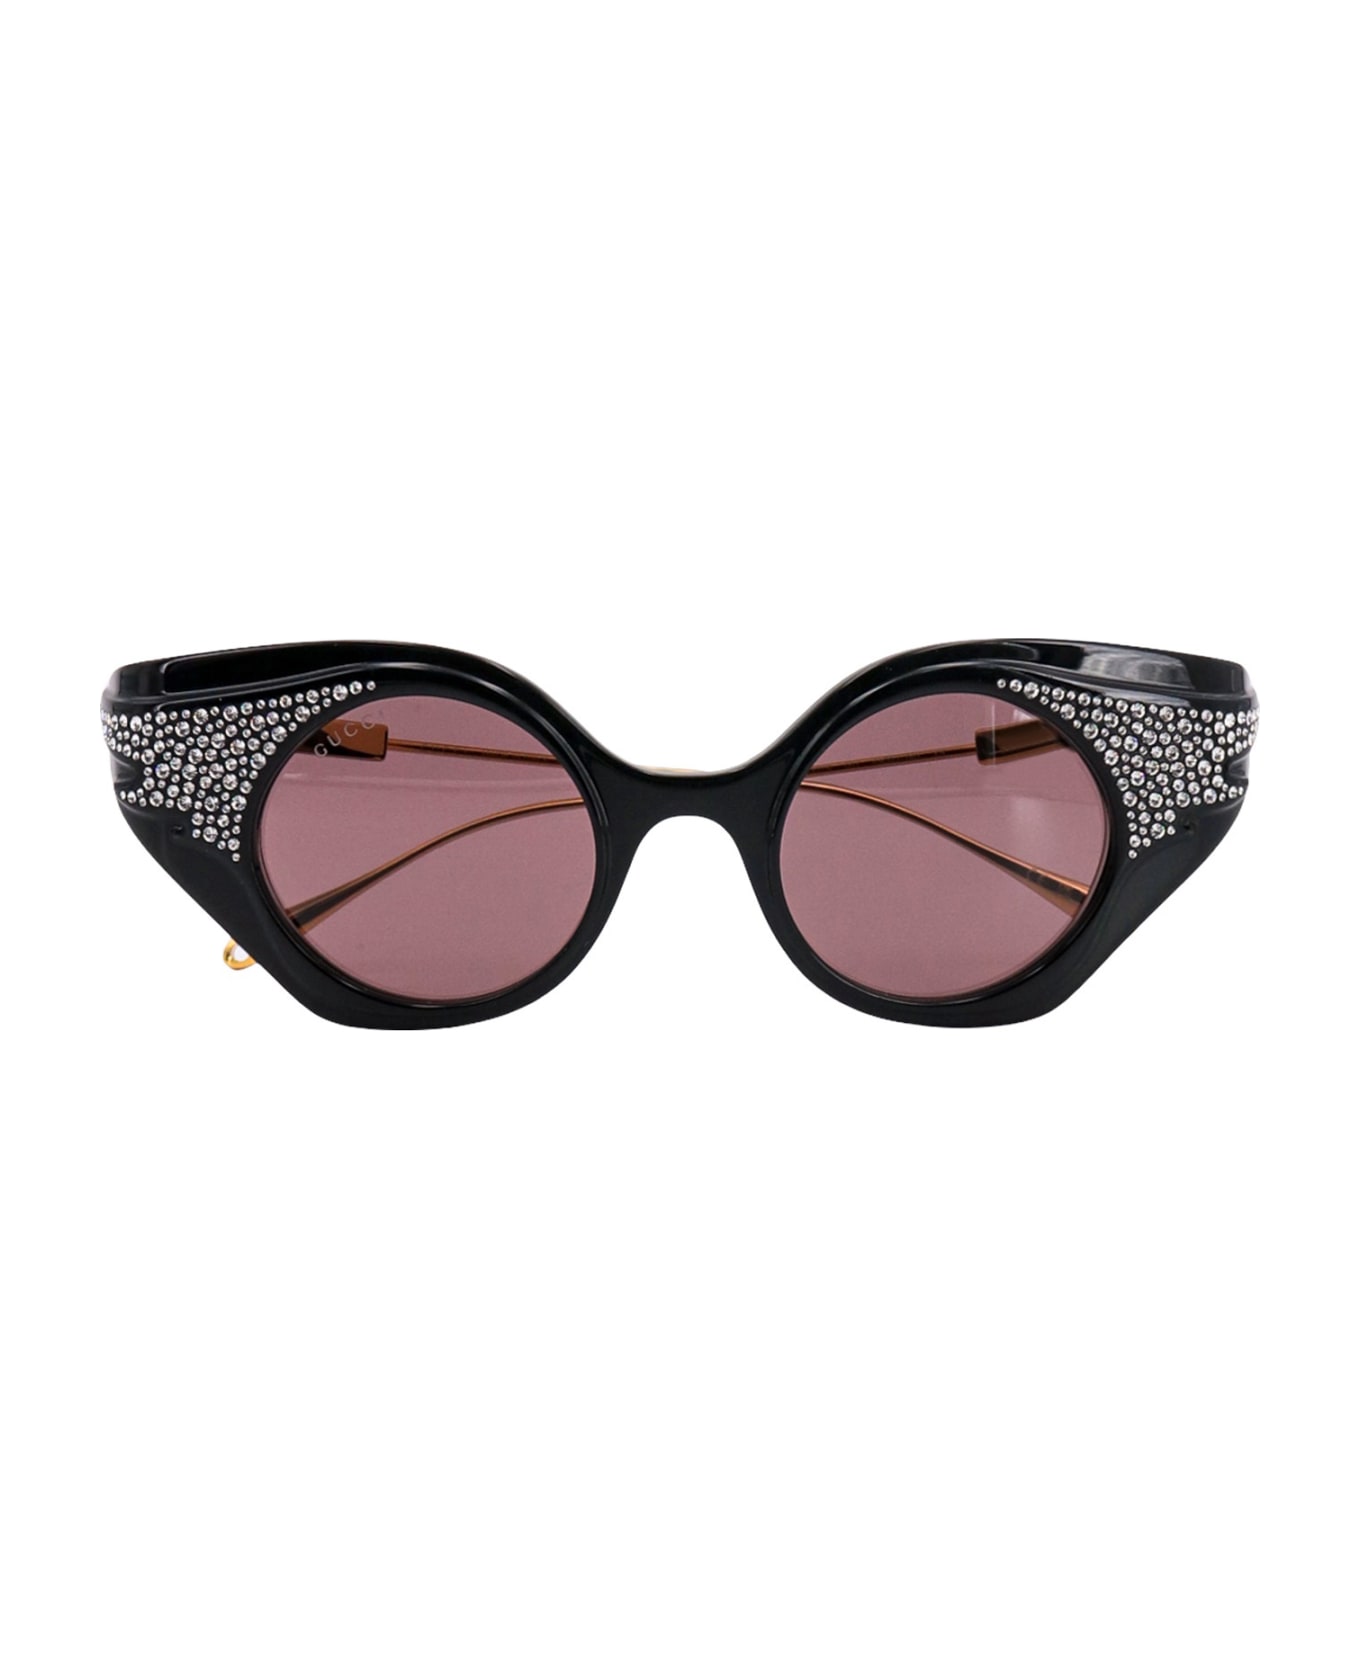 Gucci Eyewear Sunglasses - Black